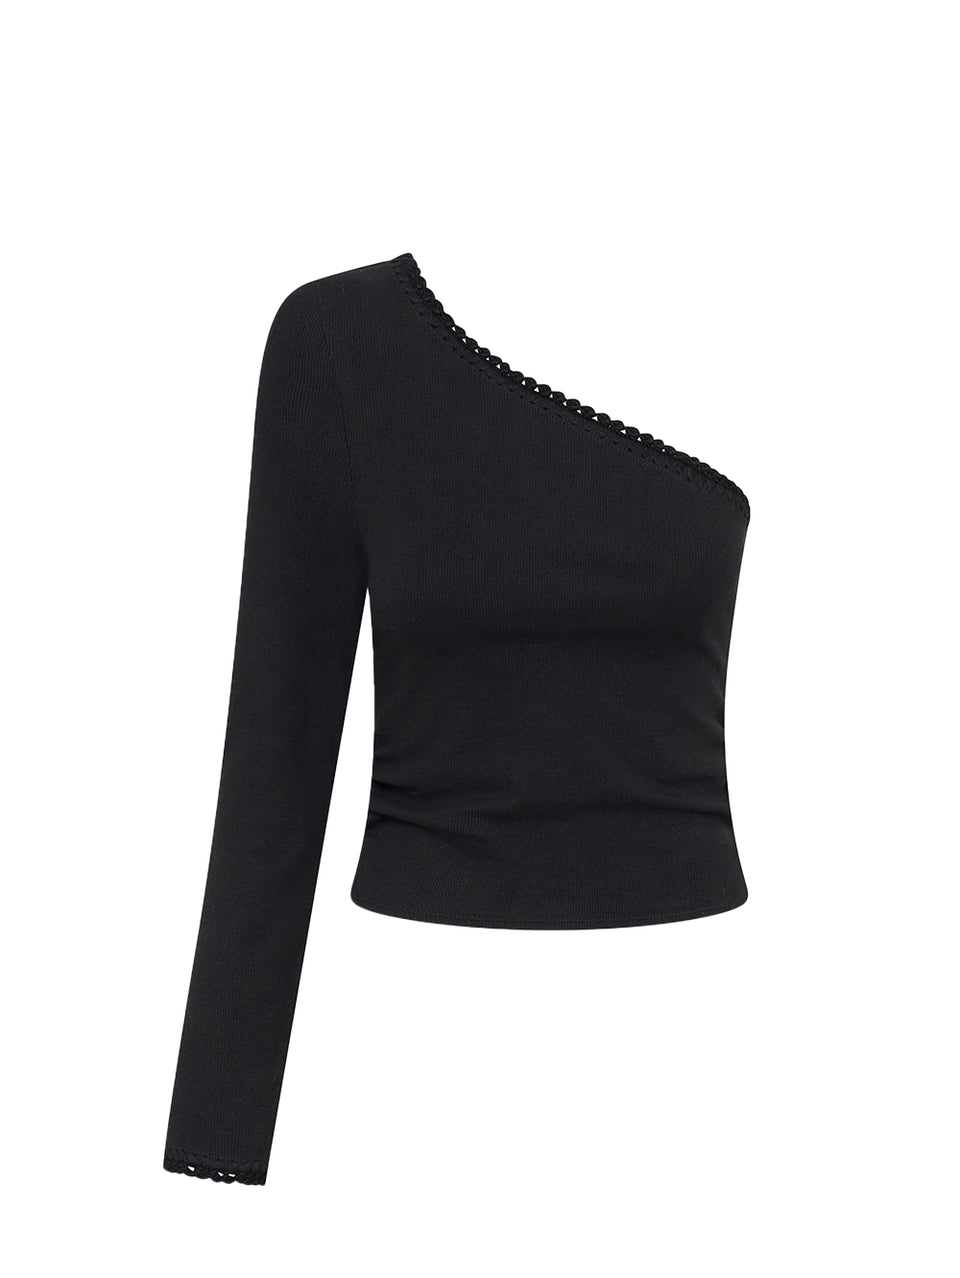 Tallulah One Shoulder Top Black KIVARI | Black lone sleeve top